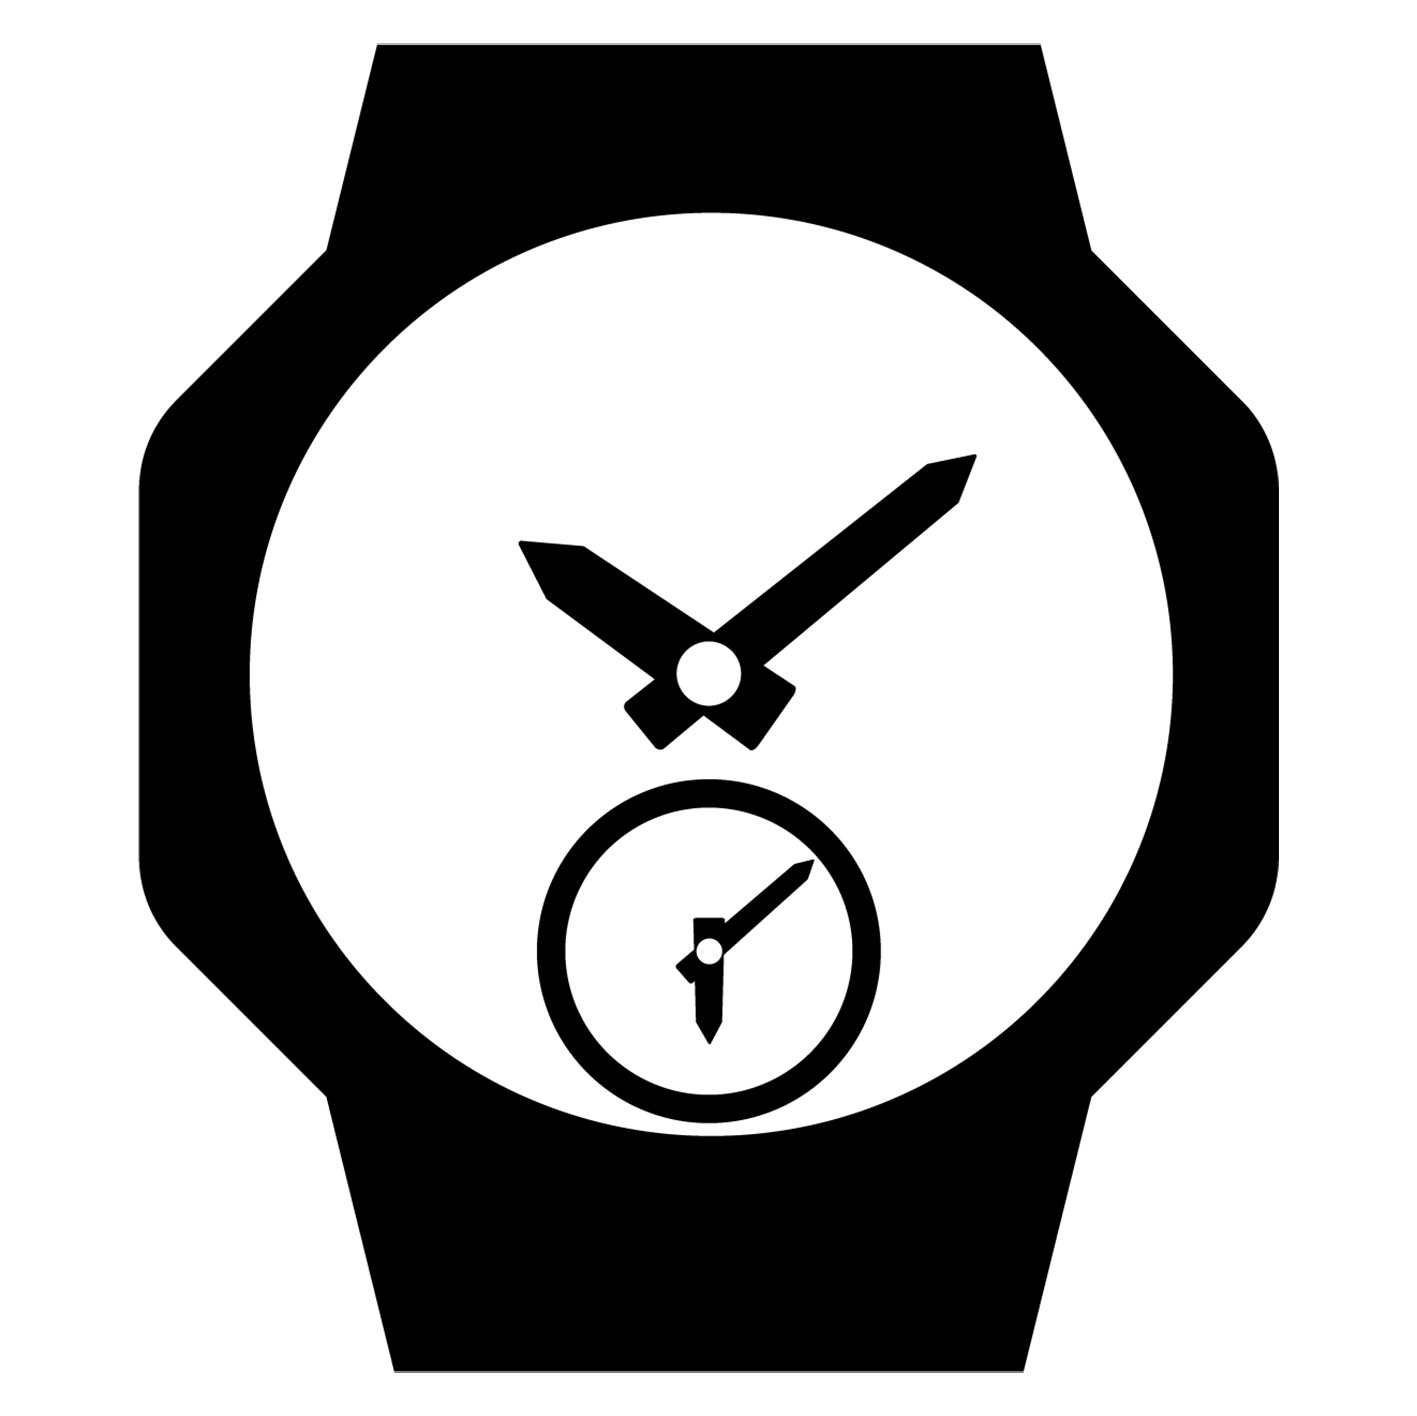 g-shock　GD-B500-7JF【国内正規品】【ノベルティ付・ｷﾞﾌﾄ包装無料】ｇショック 腕時計 メンズ レディース　画像